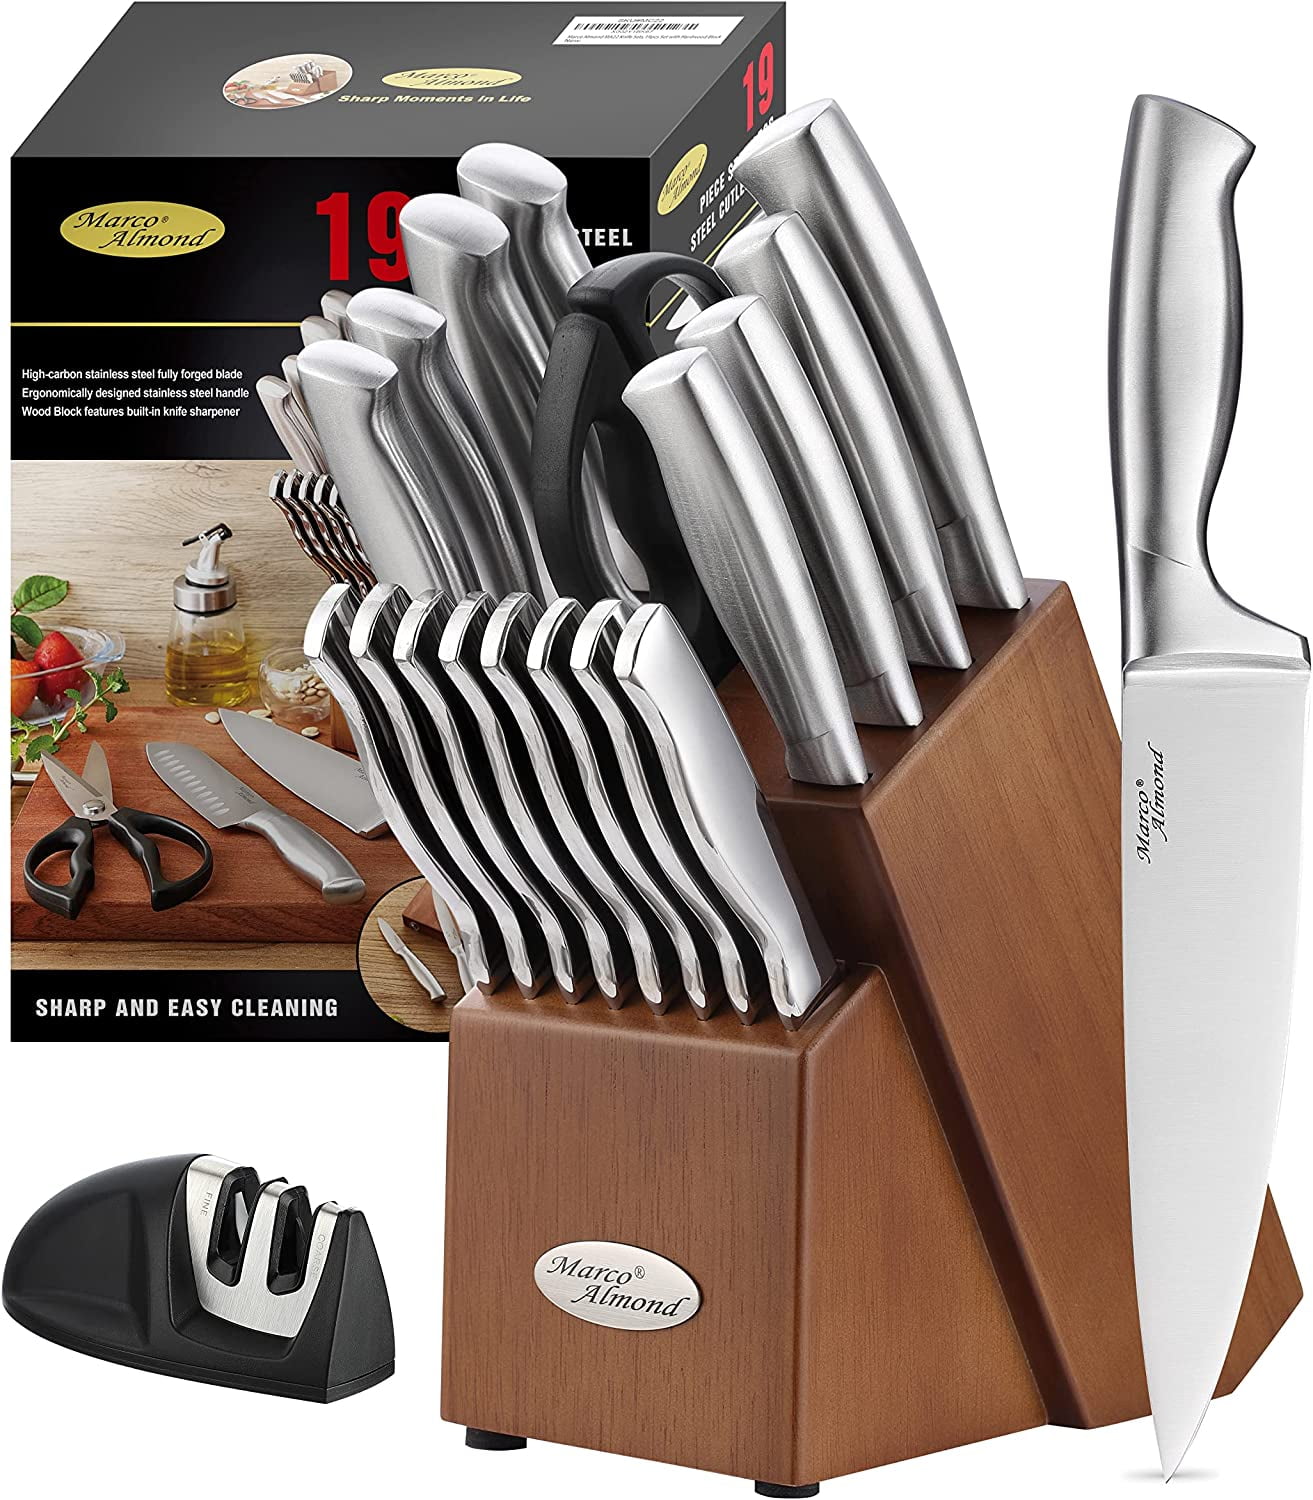 NINJA NeverDull Stainless Kitchen Knife Essential 12 Piece Set BRAND NEW  622356604857